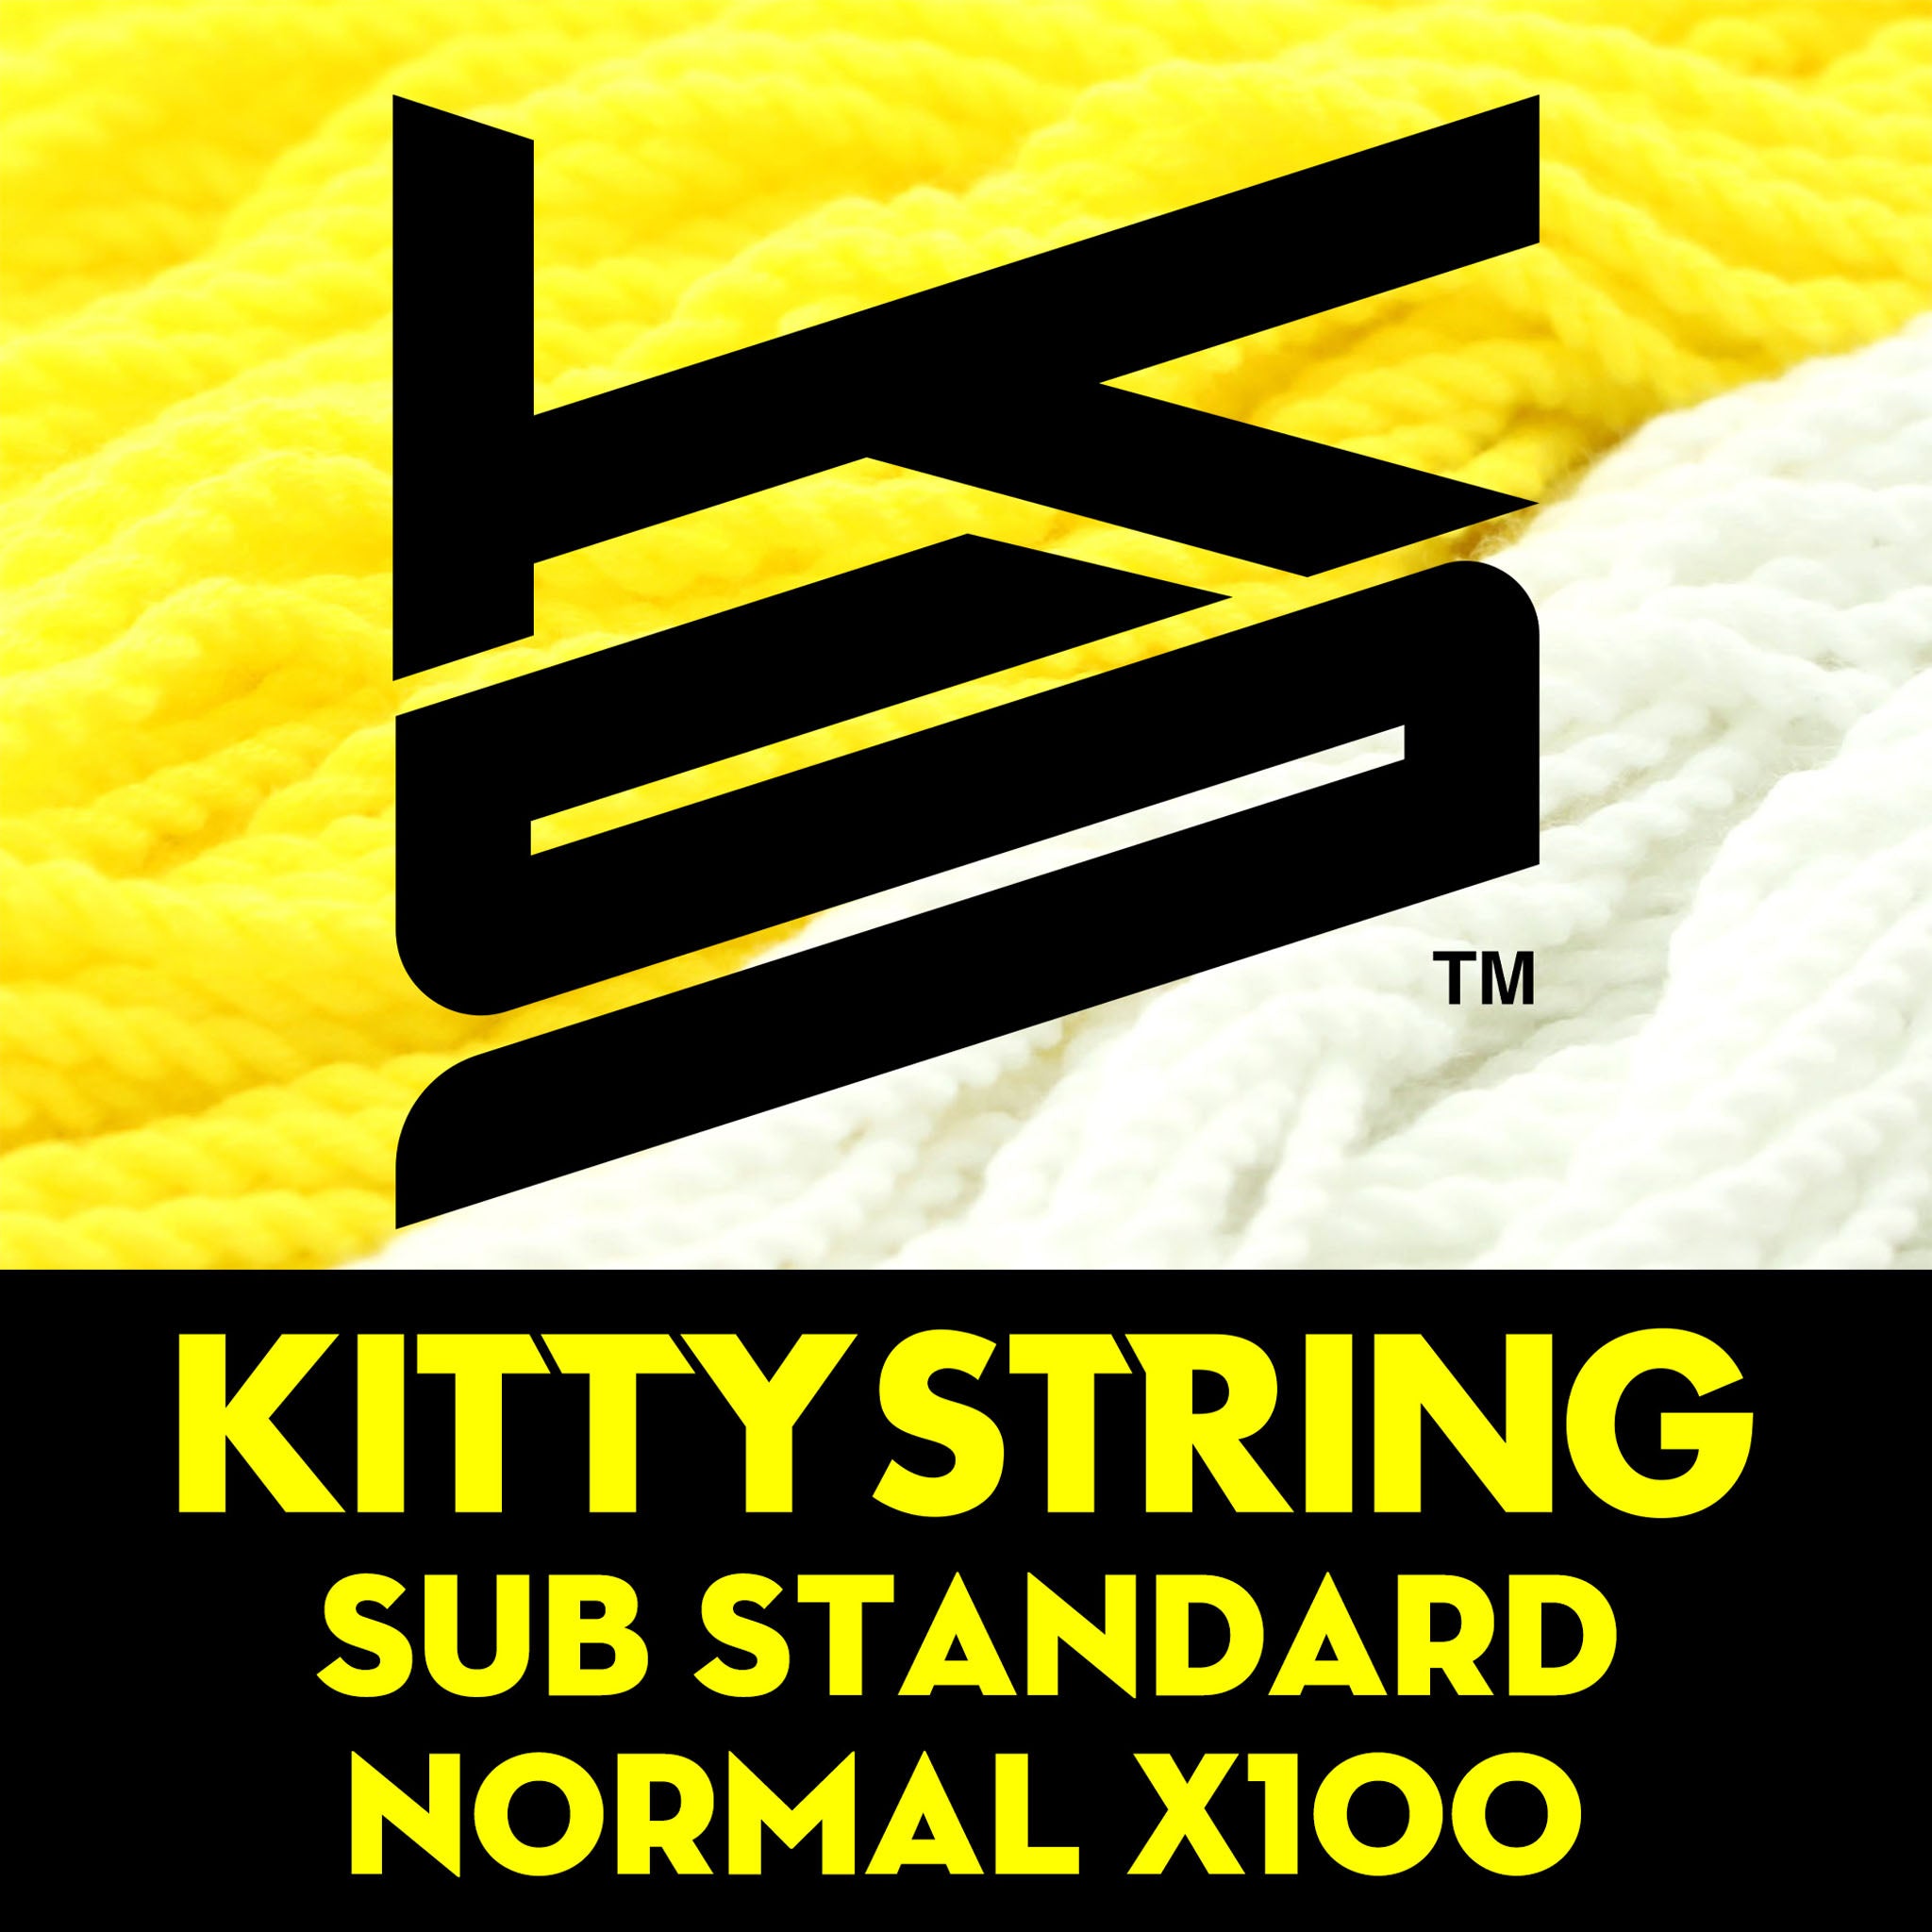 Kストリング (ポリ100) サブスタンダード ノーマル x100